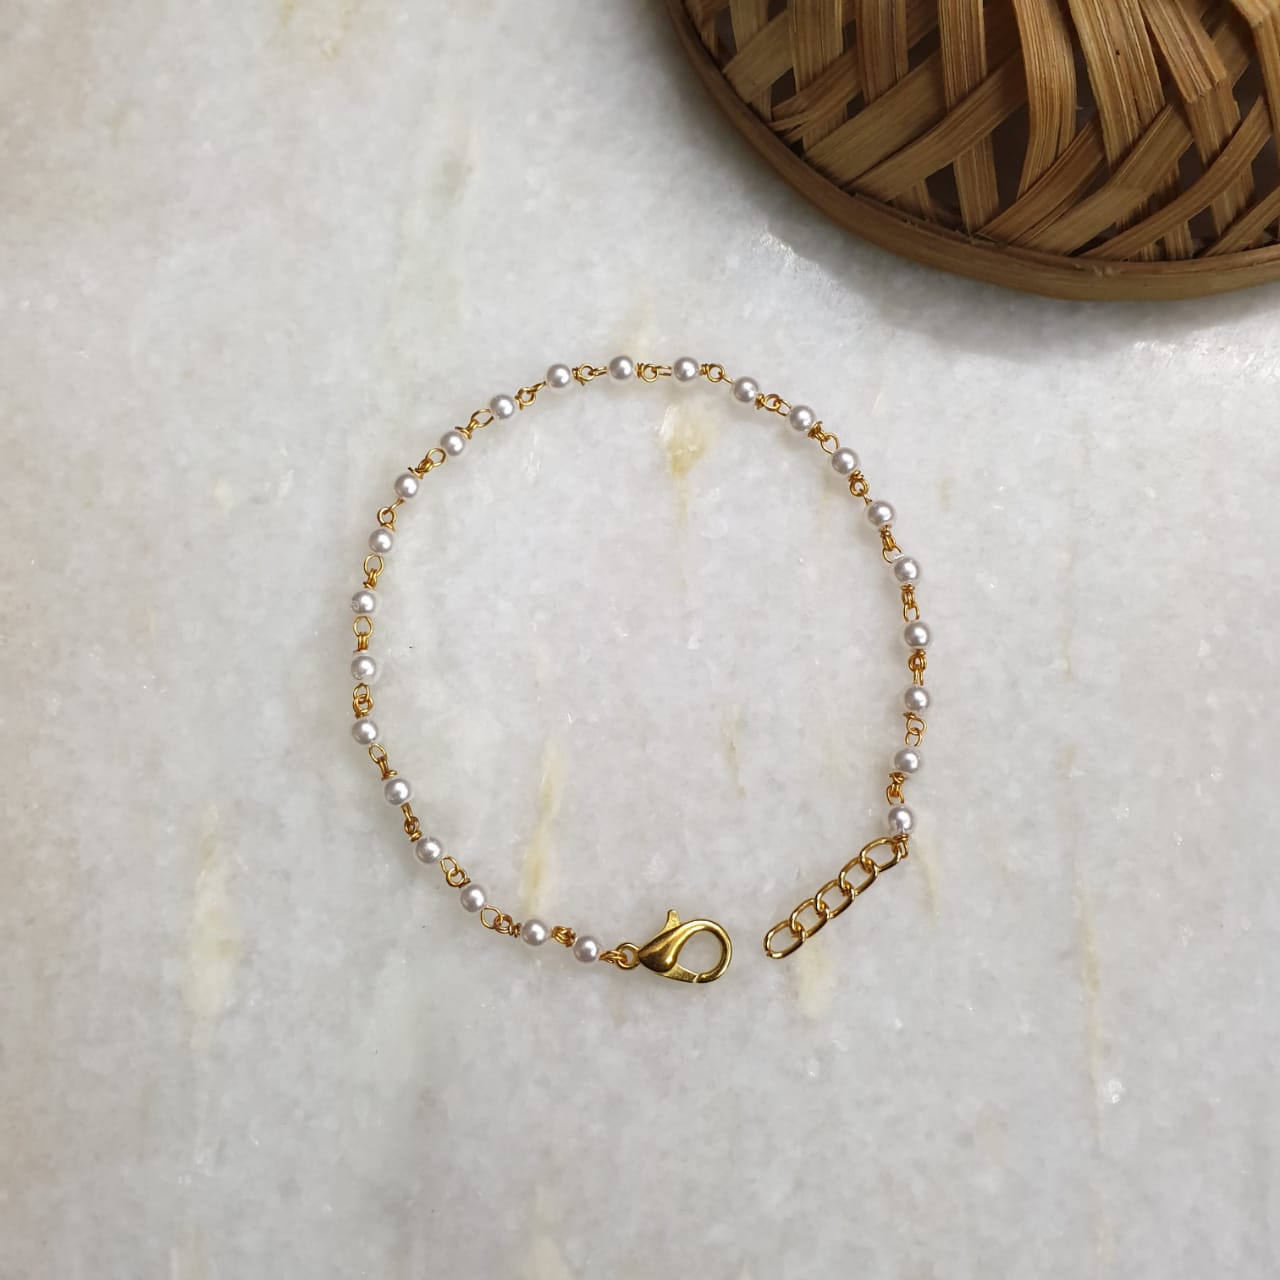 Gold Tone Small Pearl Beaded Adjustable Bracelet